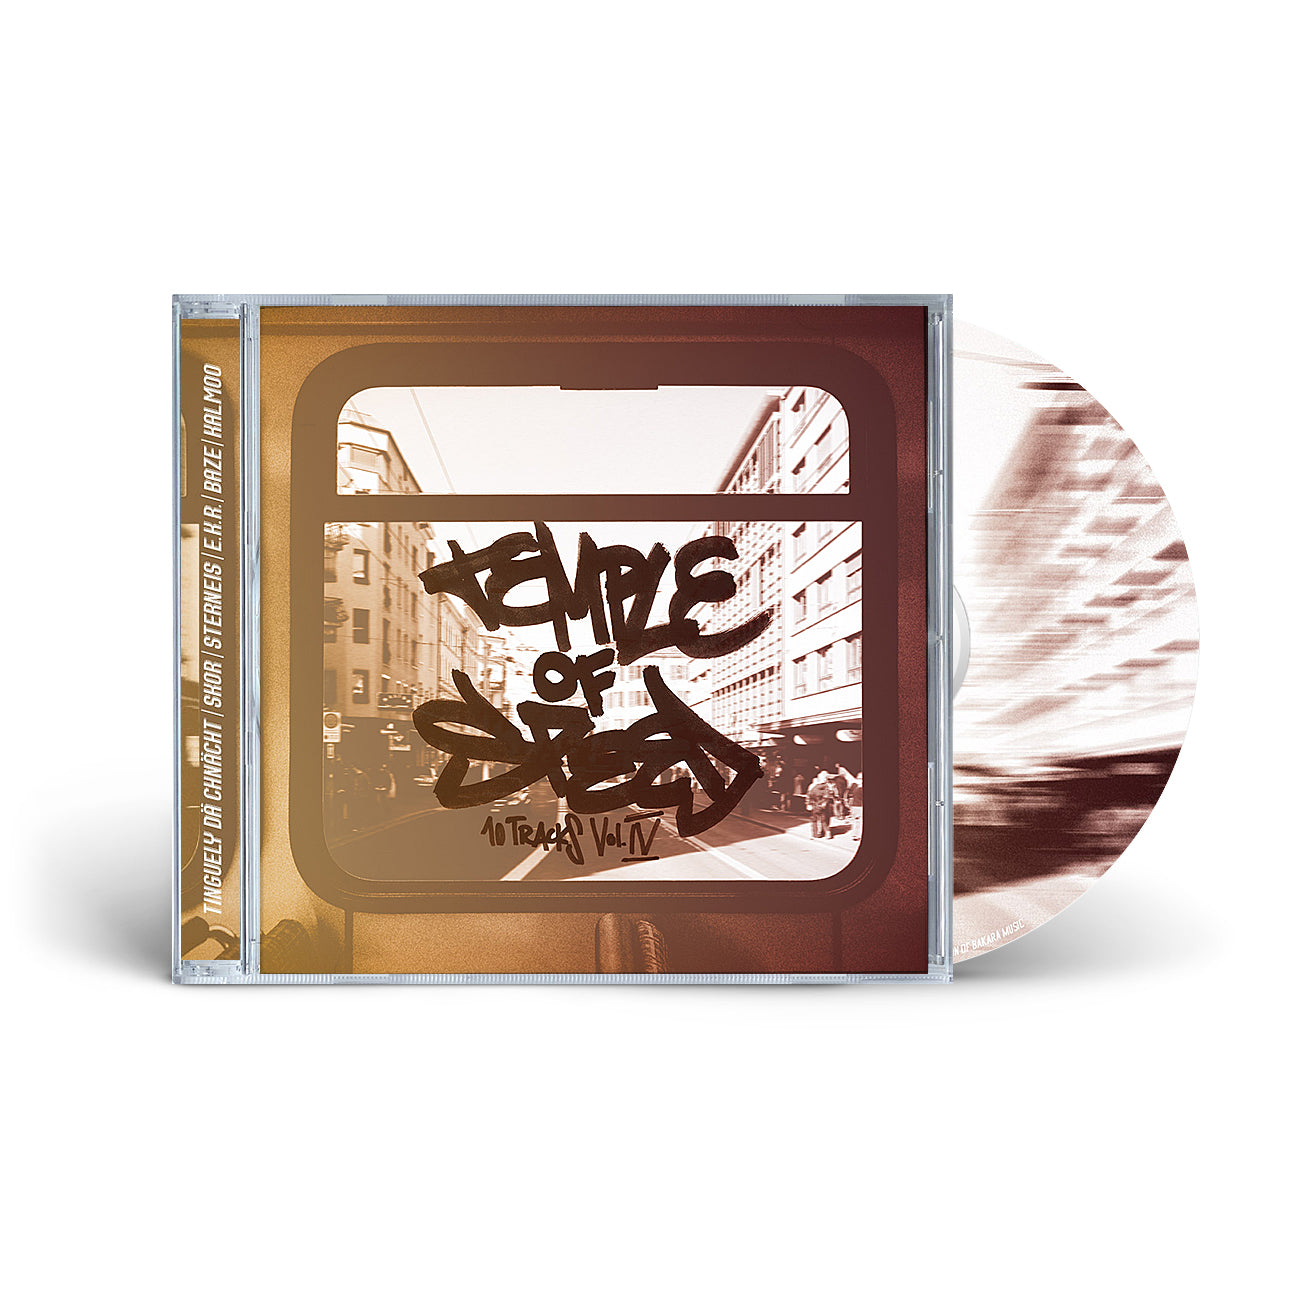 Temple of Speed | CD | 10 Tracks - Vol. 4